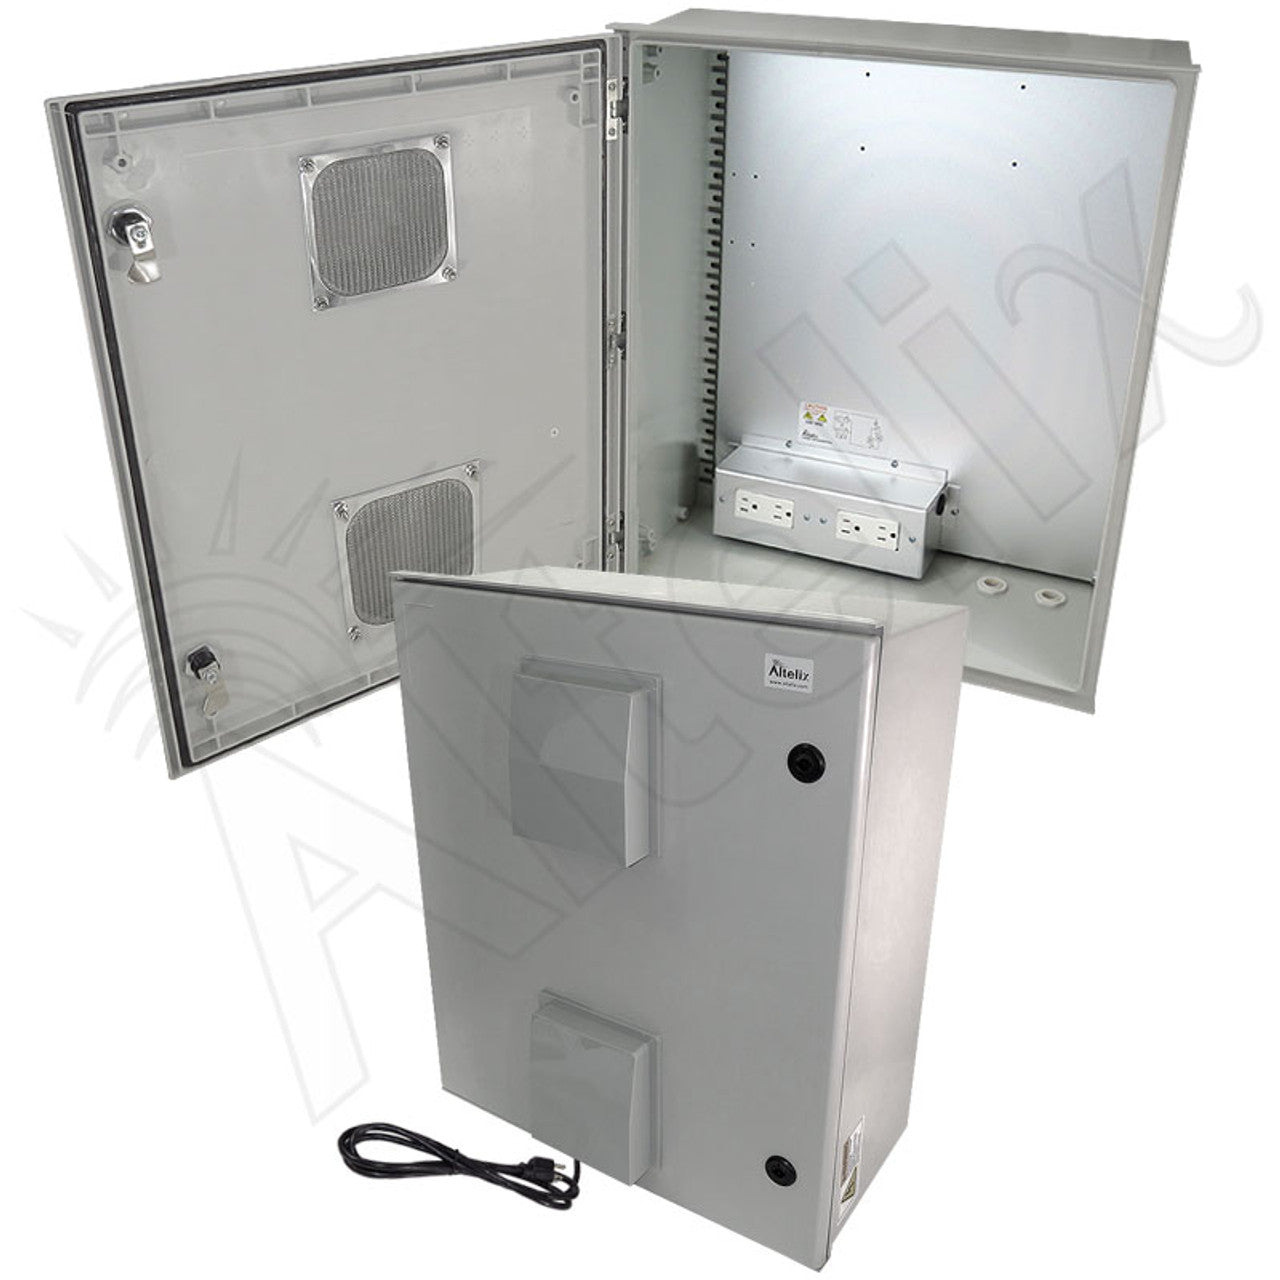 Altelix Vented Fiberglass Weatherproof NEMA Enclosure with Equipment Mounting Plate, 120 VAC Outlets & Power Cord-7